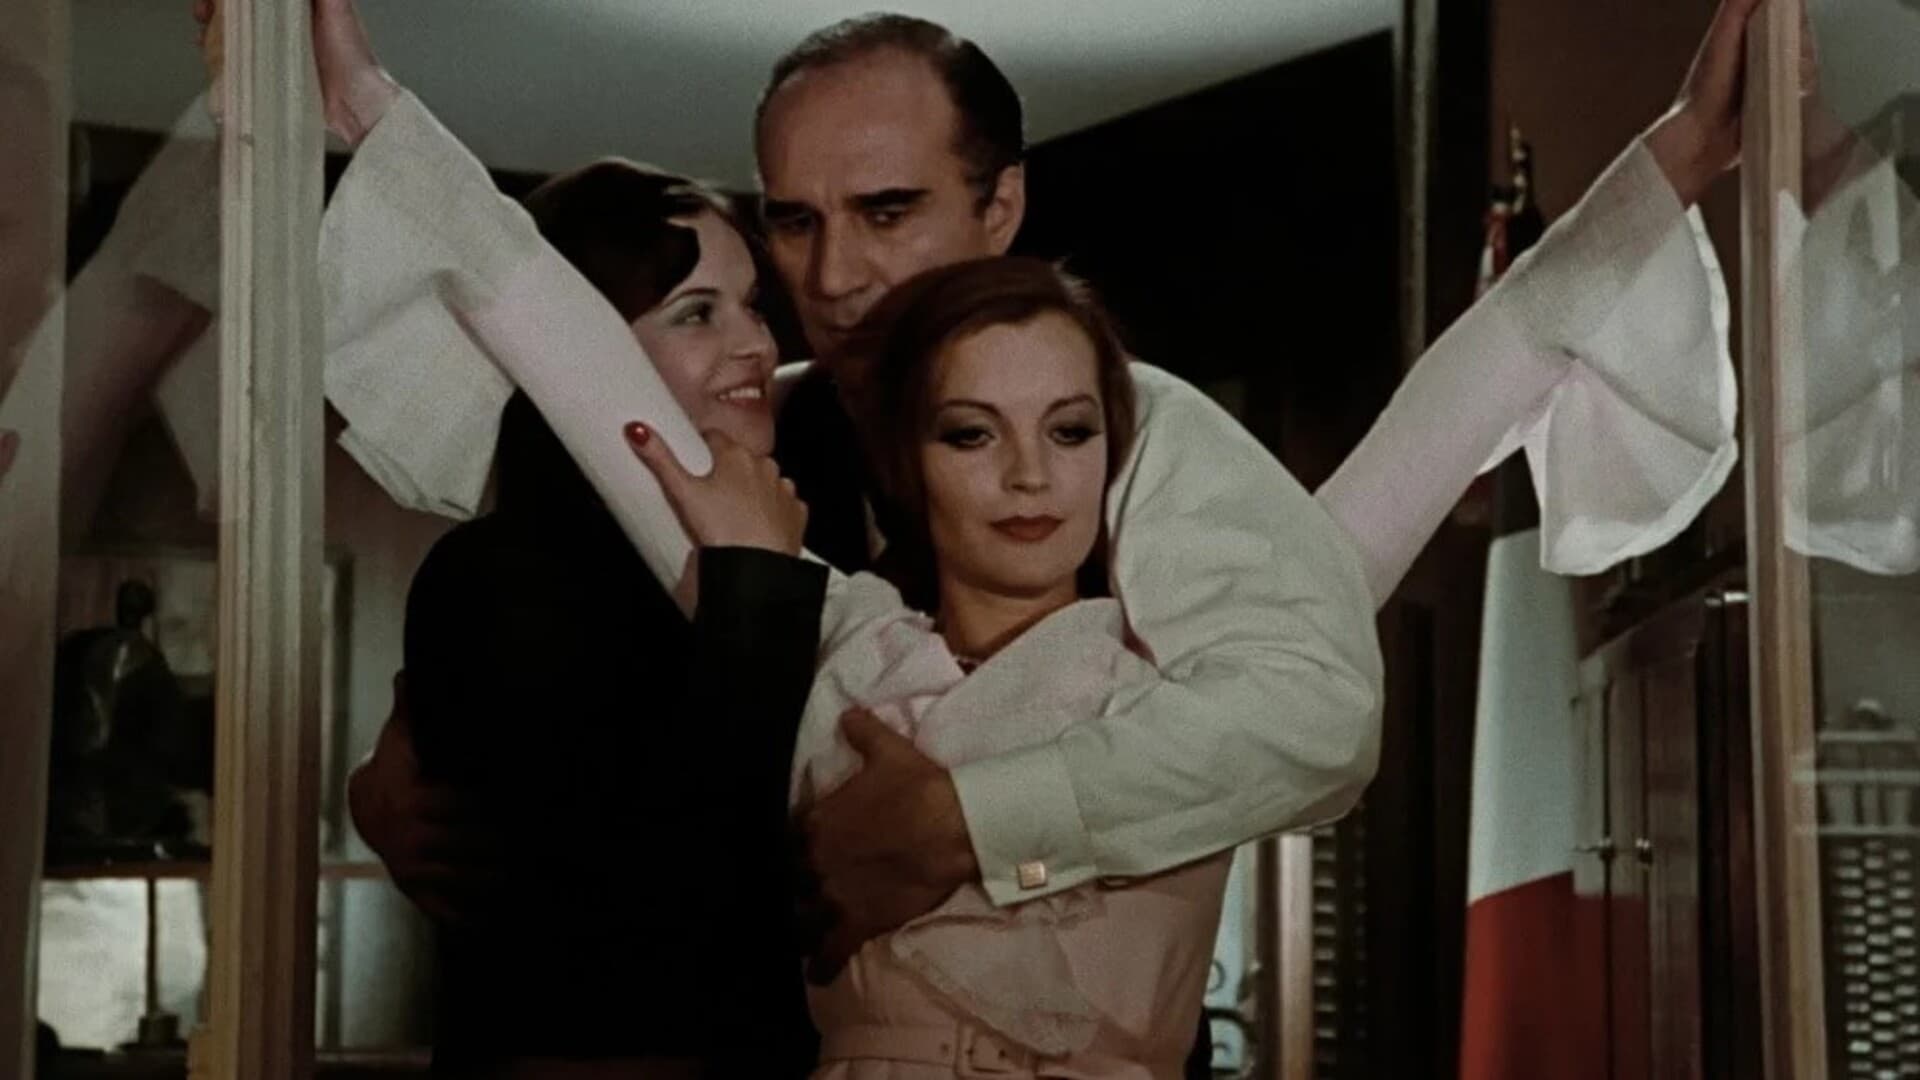 Le Trio Infernal (1974)